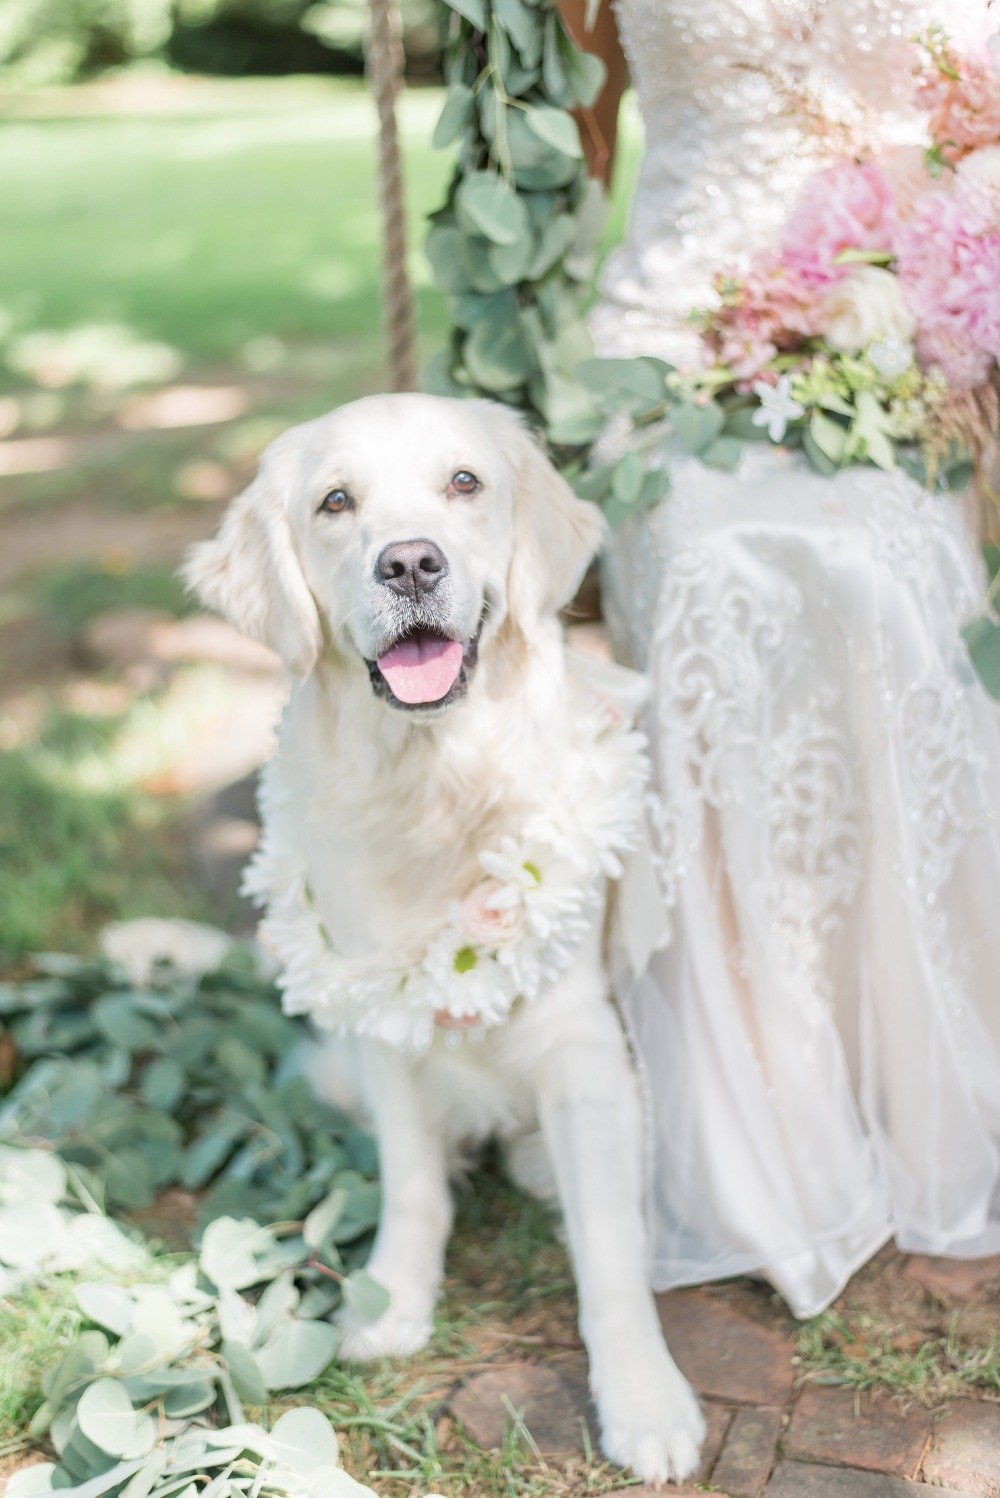 Cute wedding pup